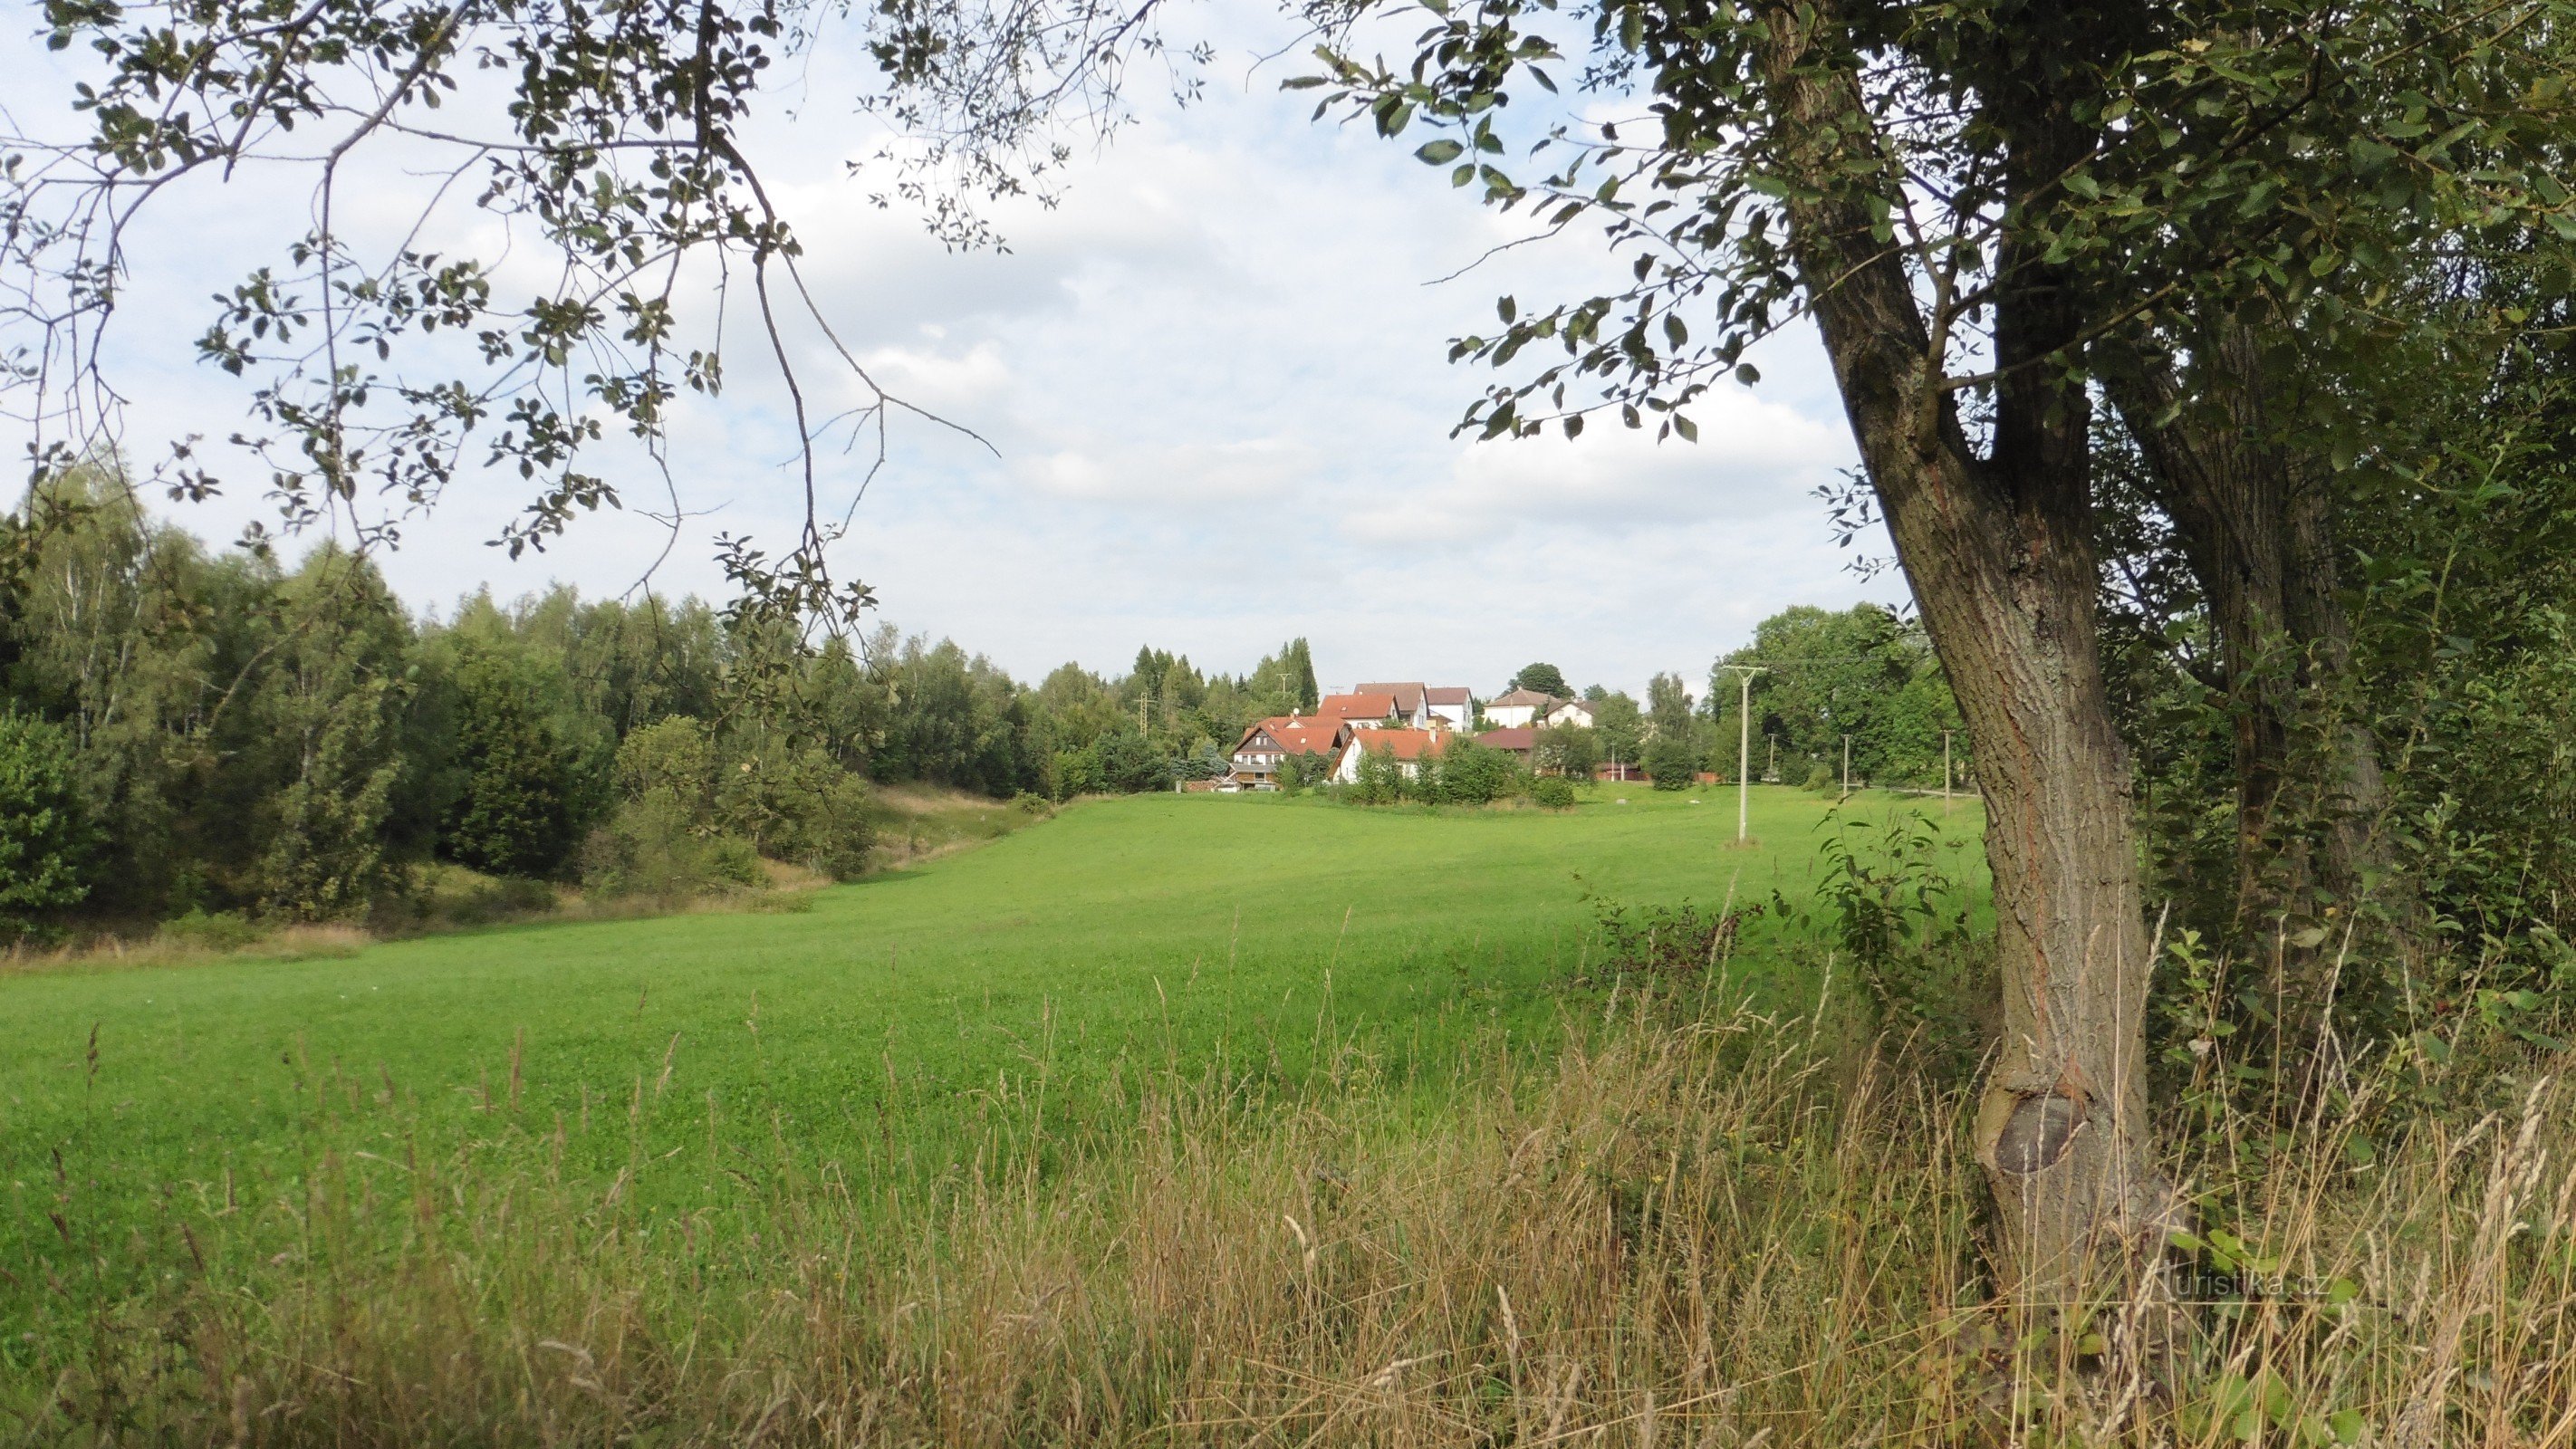 Kvasetice，从 Michalovice 的路上可以看到，左边是一片森林，那里有一座坟墓